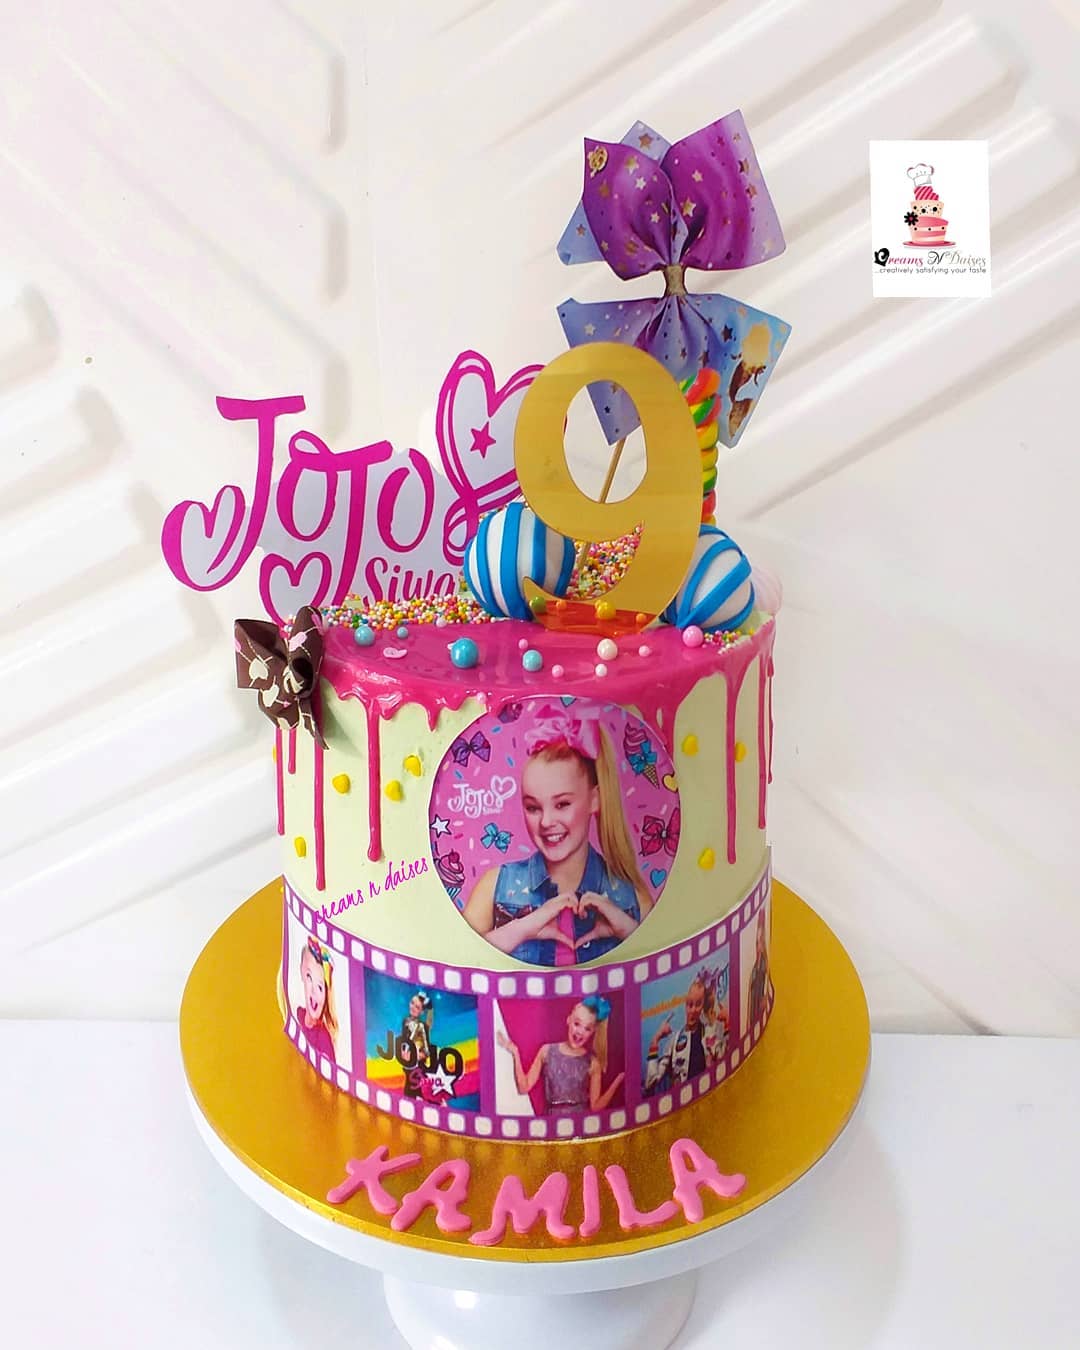 JoJo Siwa Decorative Baking in JoJo Siwa Party Supplies - Walmart.com